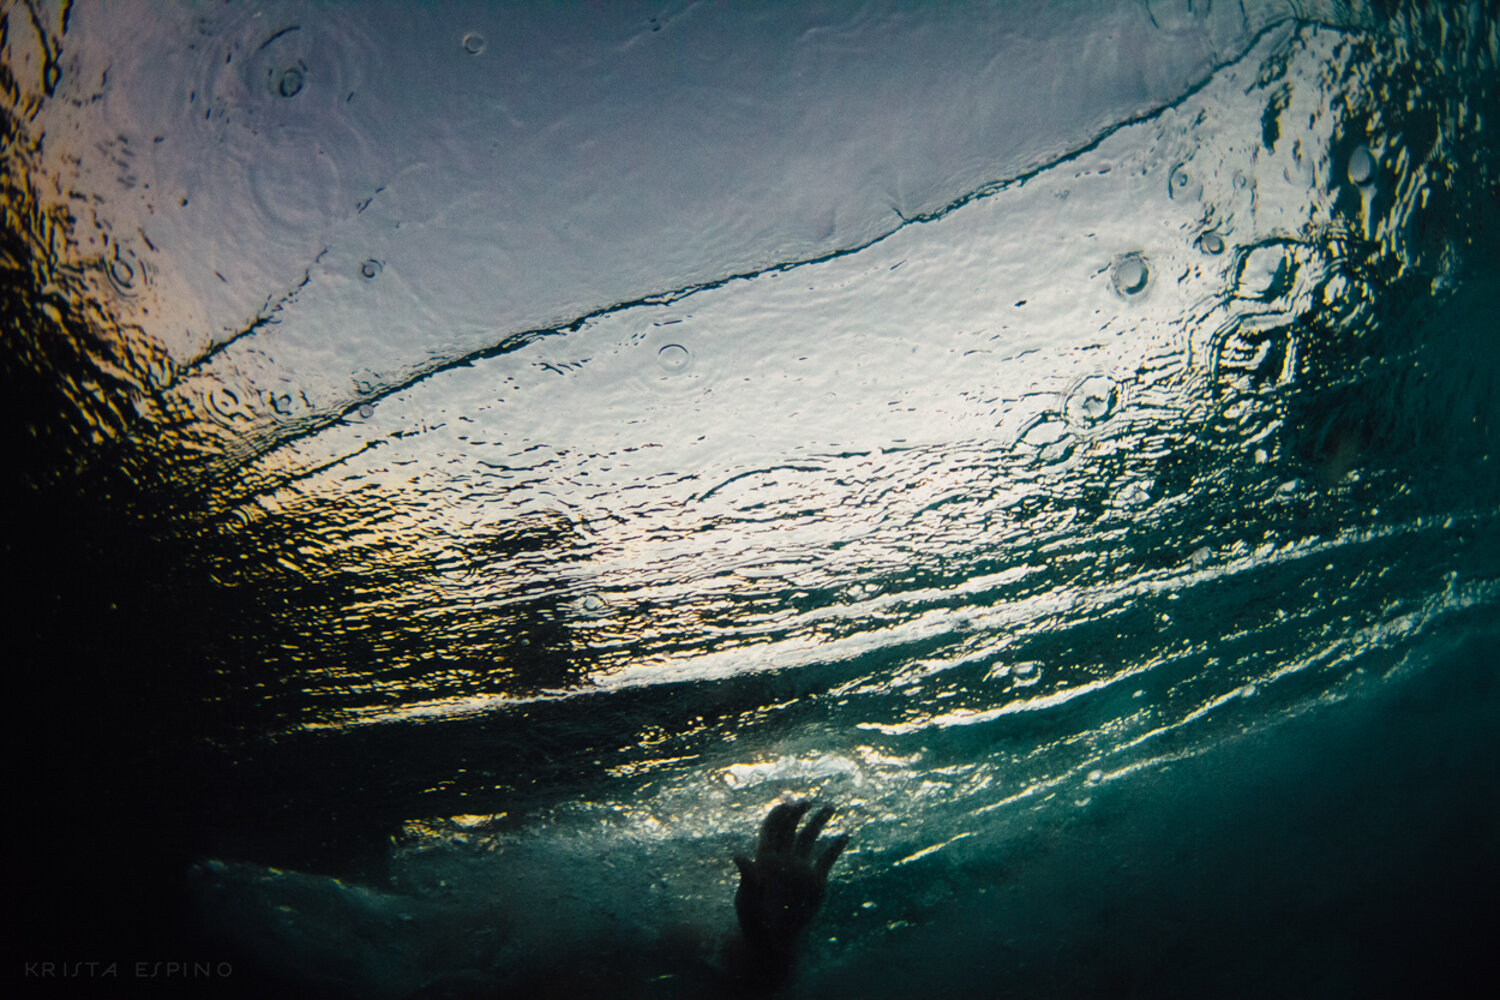 bodysurf waves lifestyle nature photography photographer krista espino travel underwater swim ocean laguna beach_-14.jpg